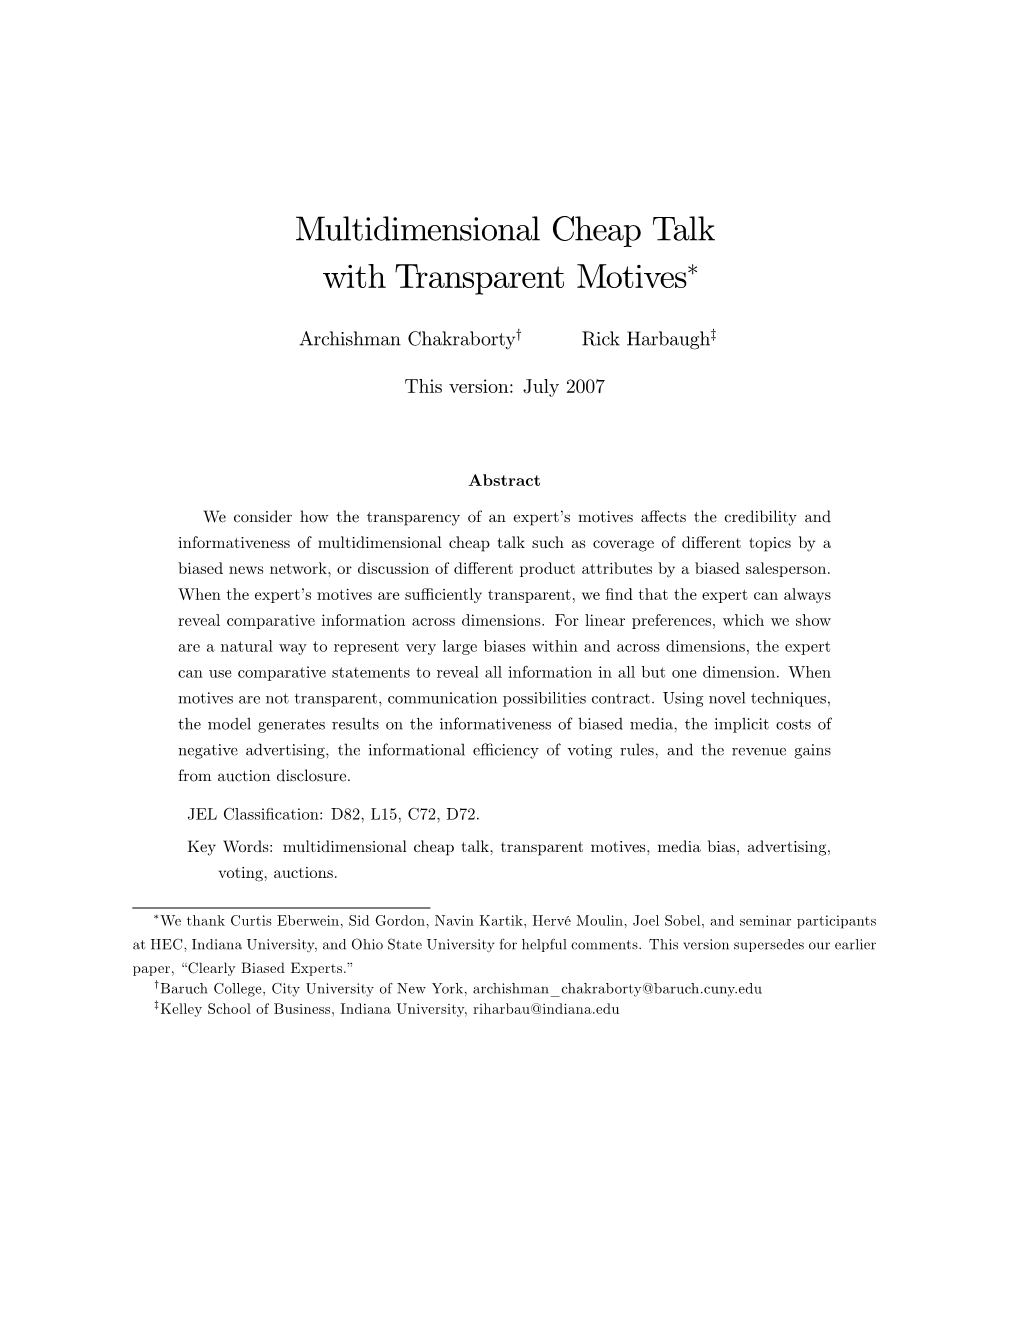 Multidimensional Cheap Talk with Transparent Motives"